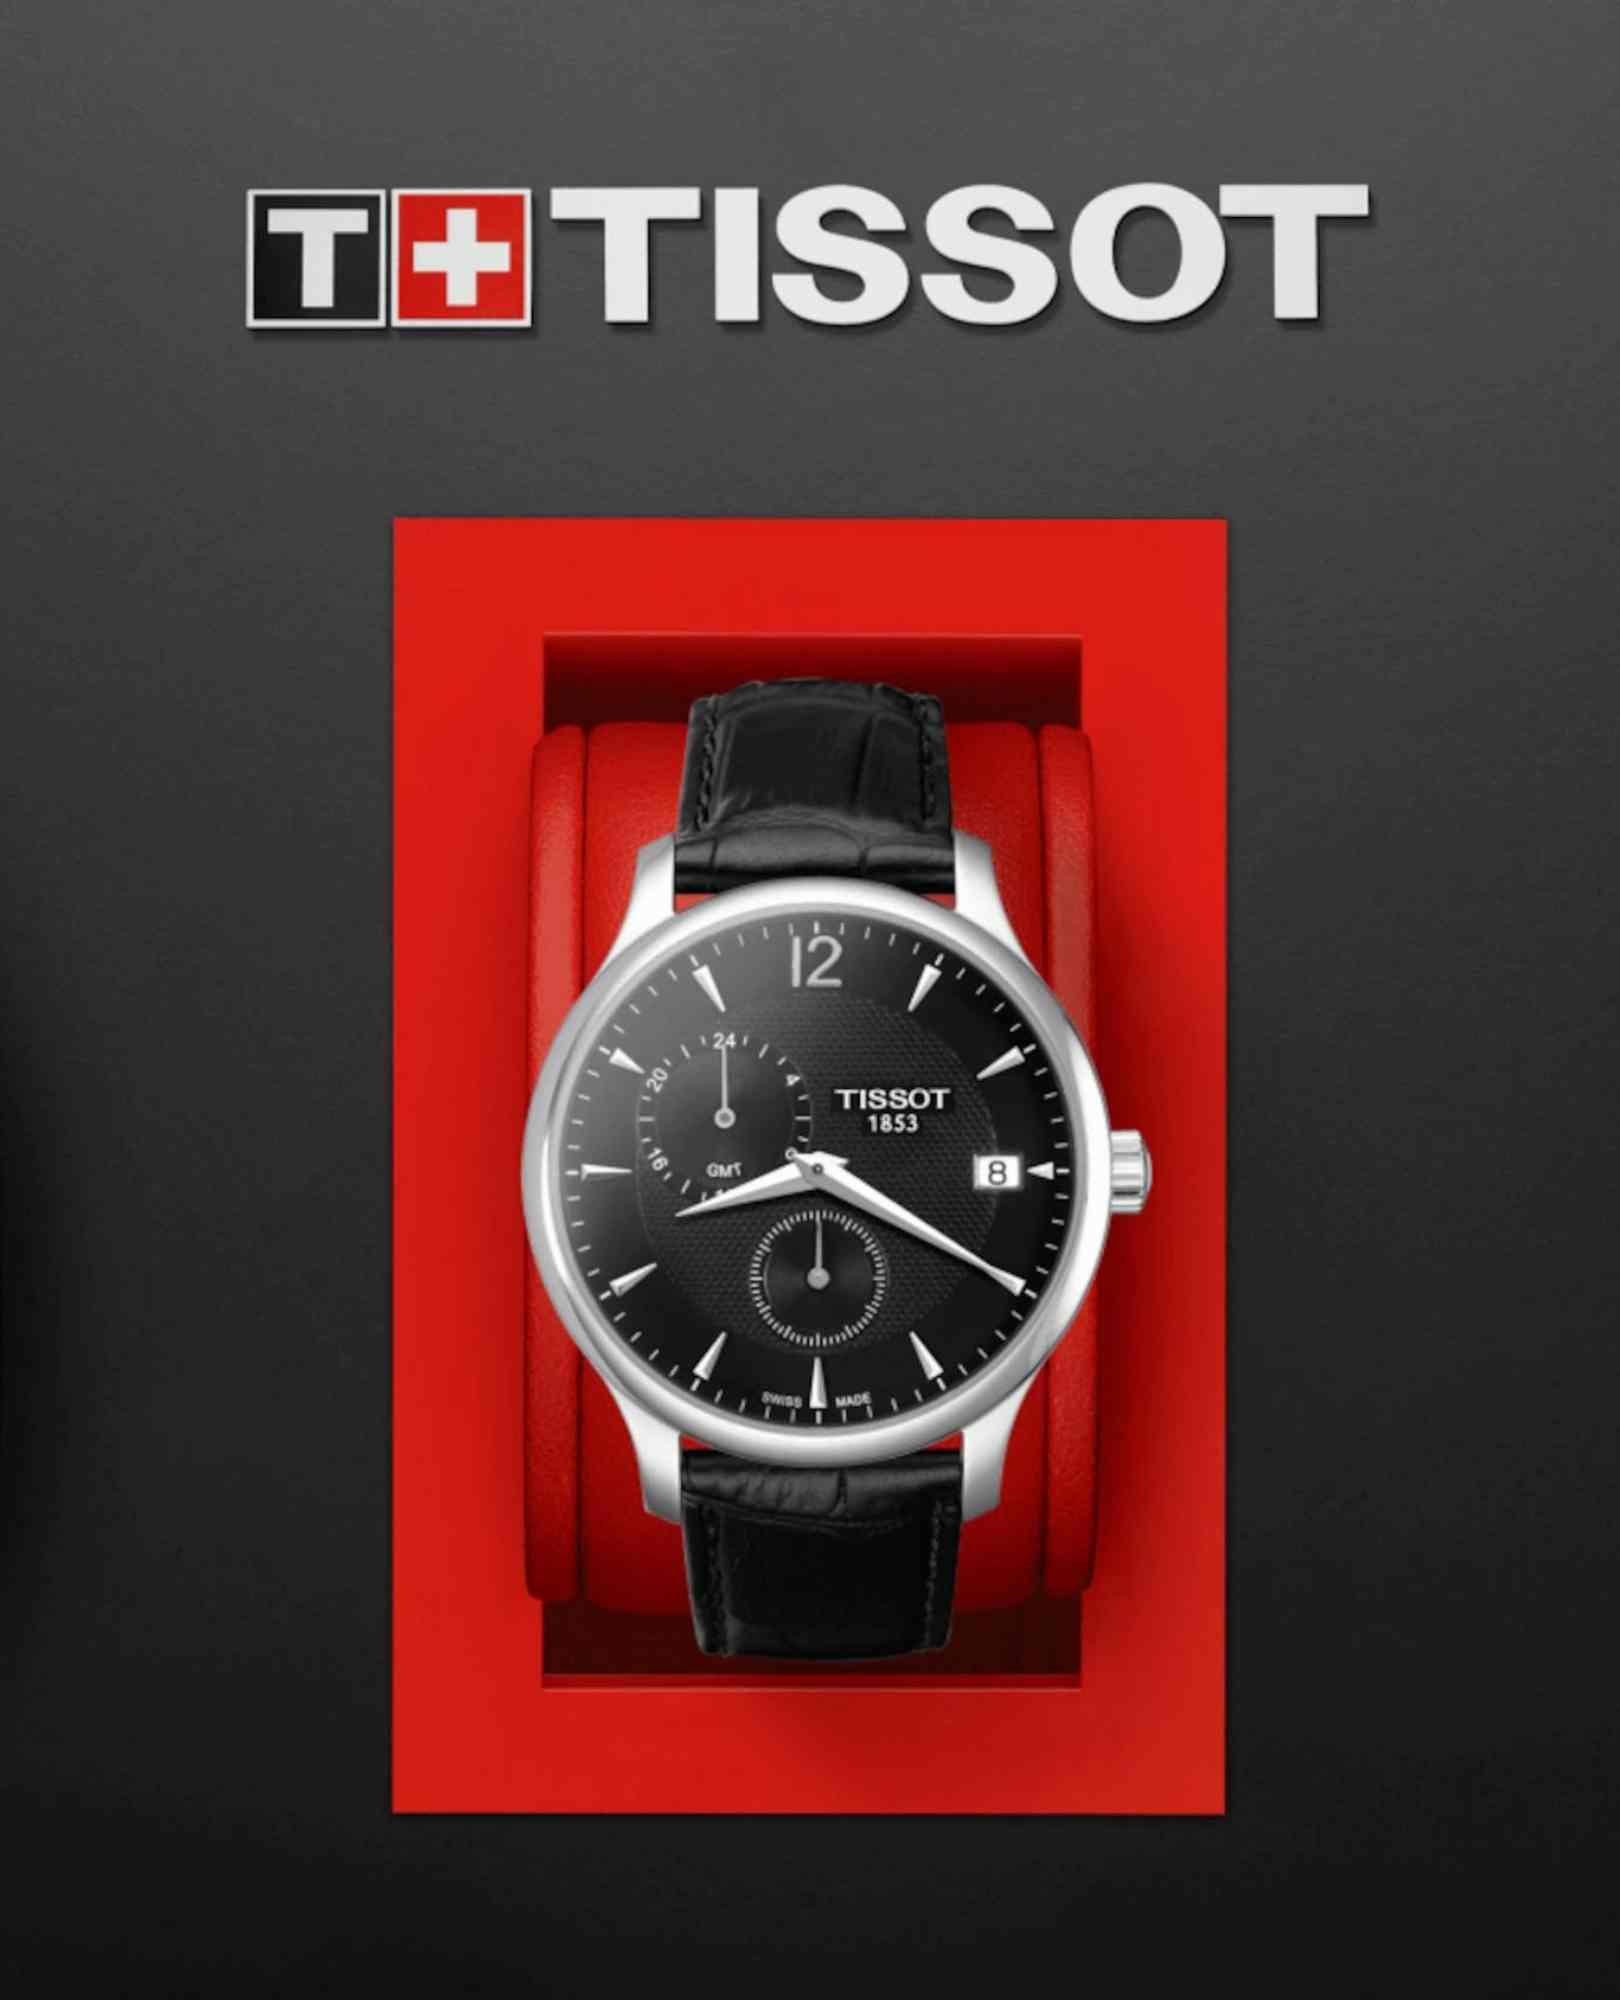 Relógio Tissot  Tradition GMT Preto T063.639.16.057.00